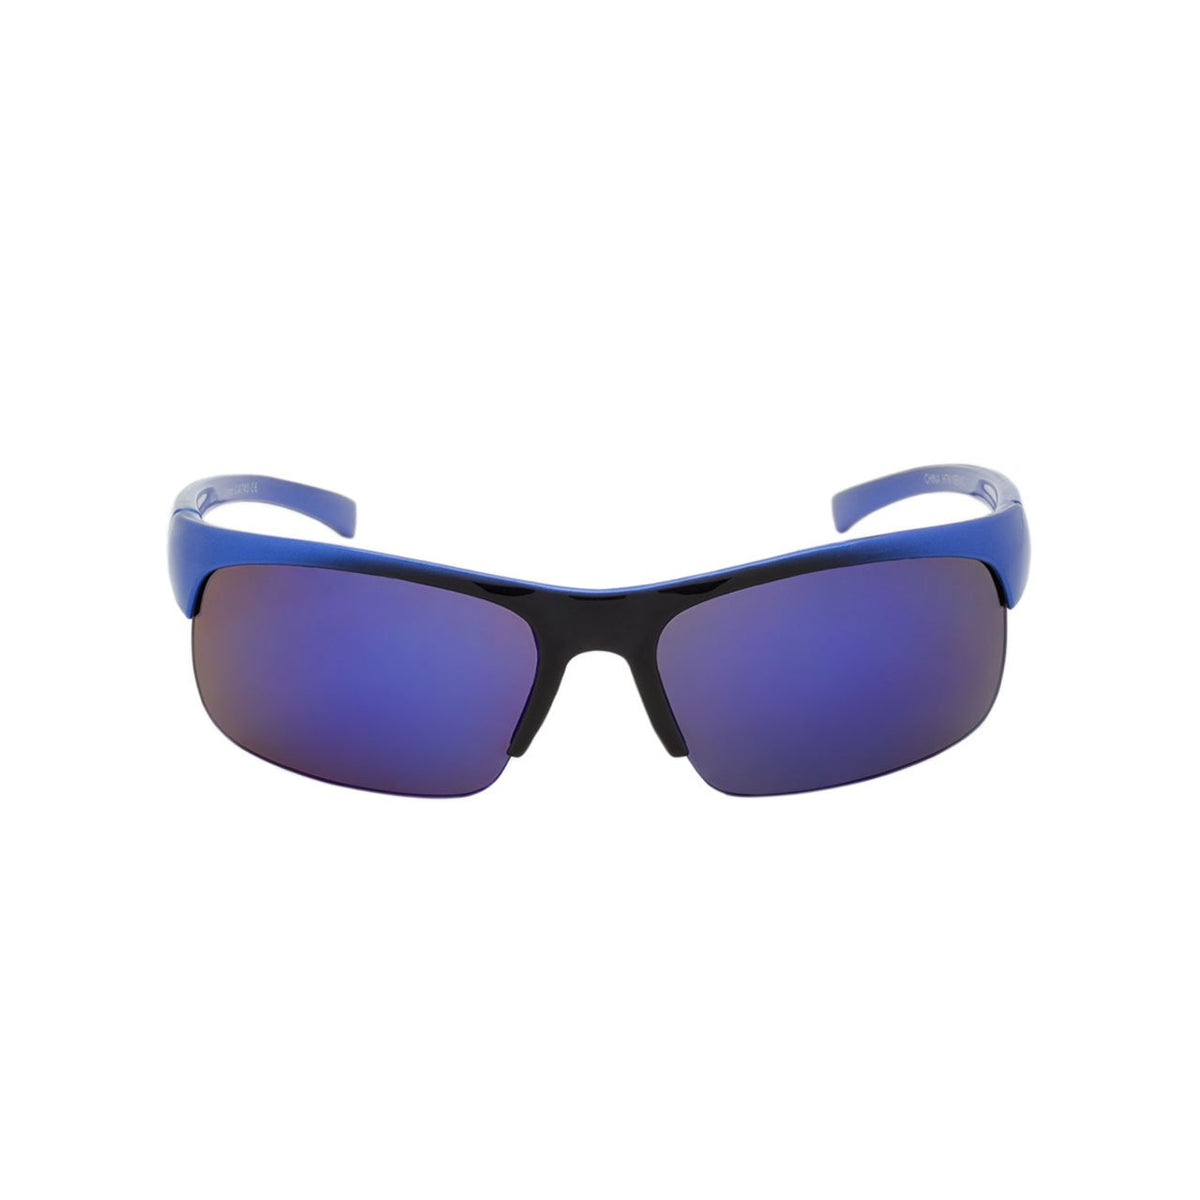 Boys Sport Polarized Sunglasses Daytona Blue – Hang Ten Kids Sunglasses